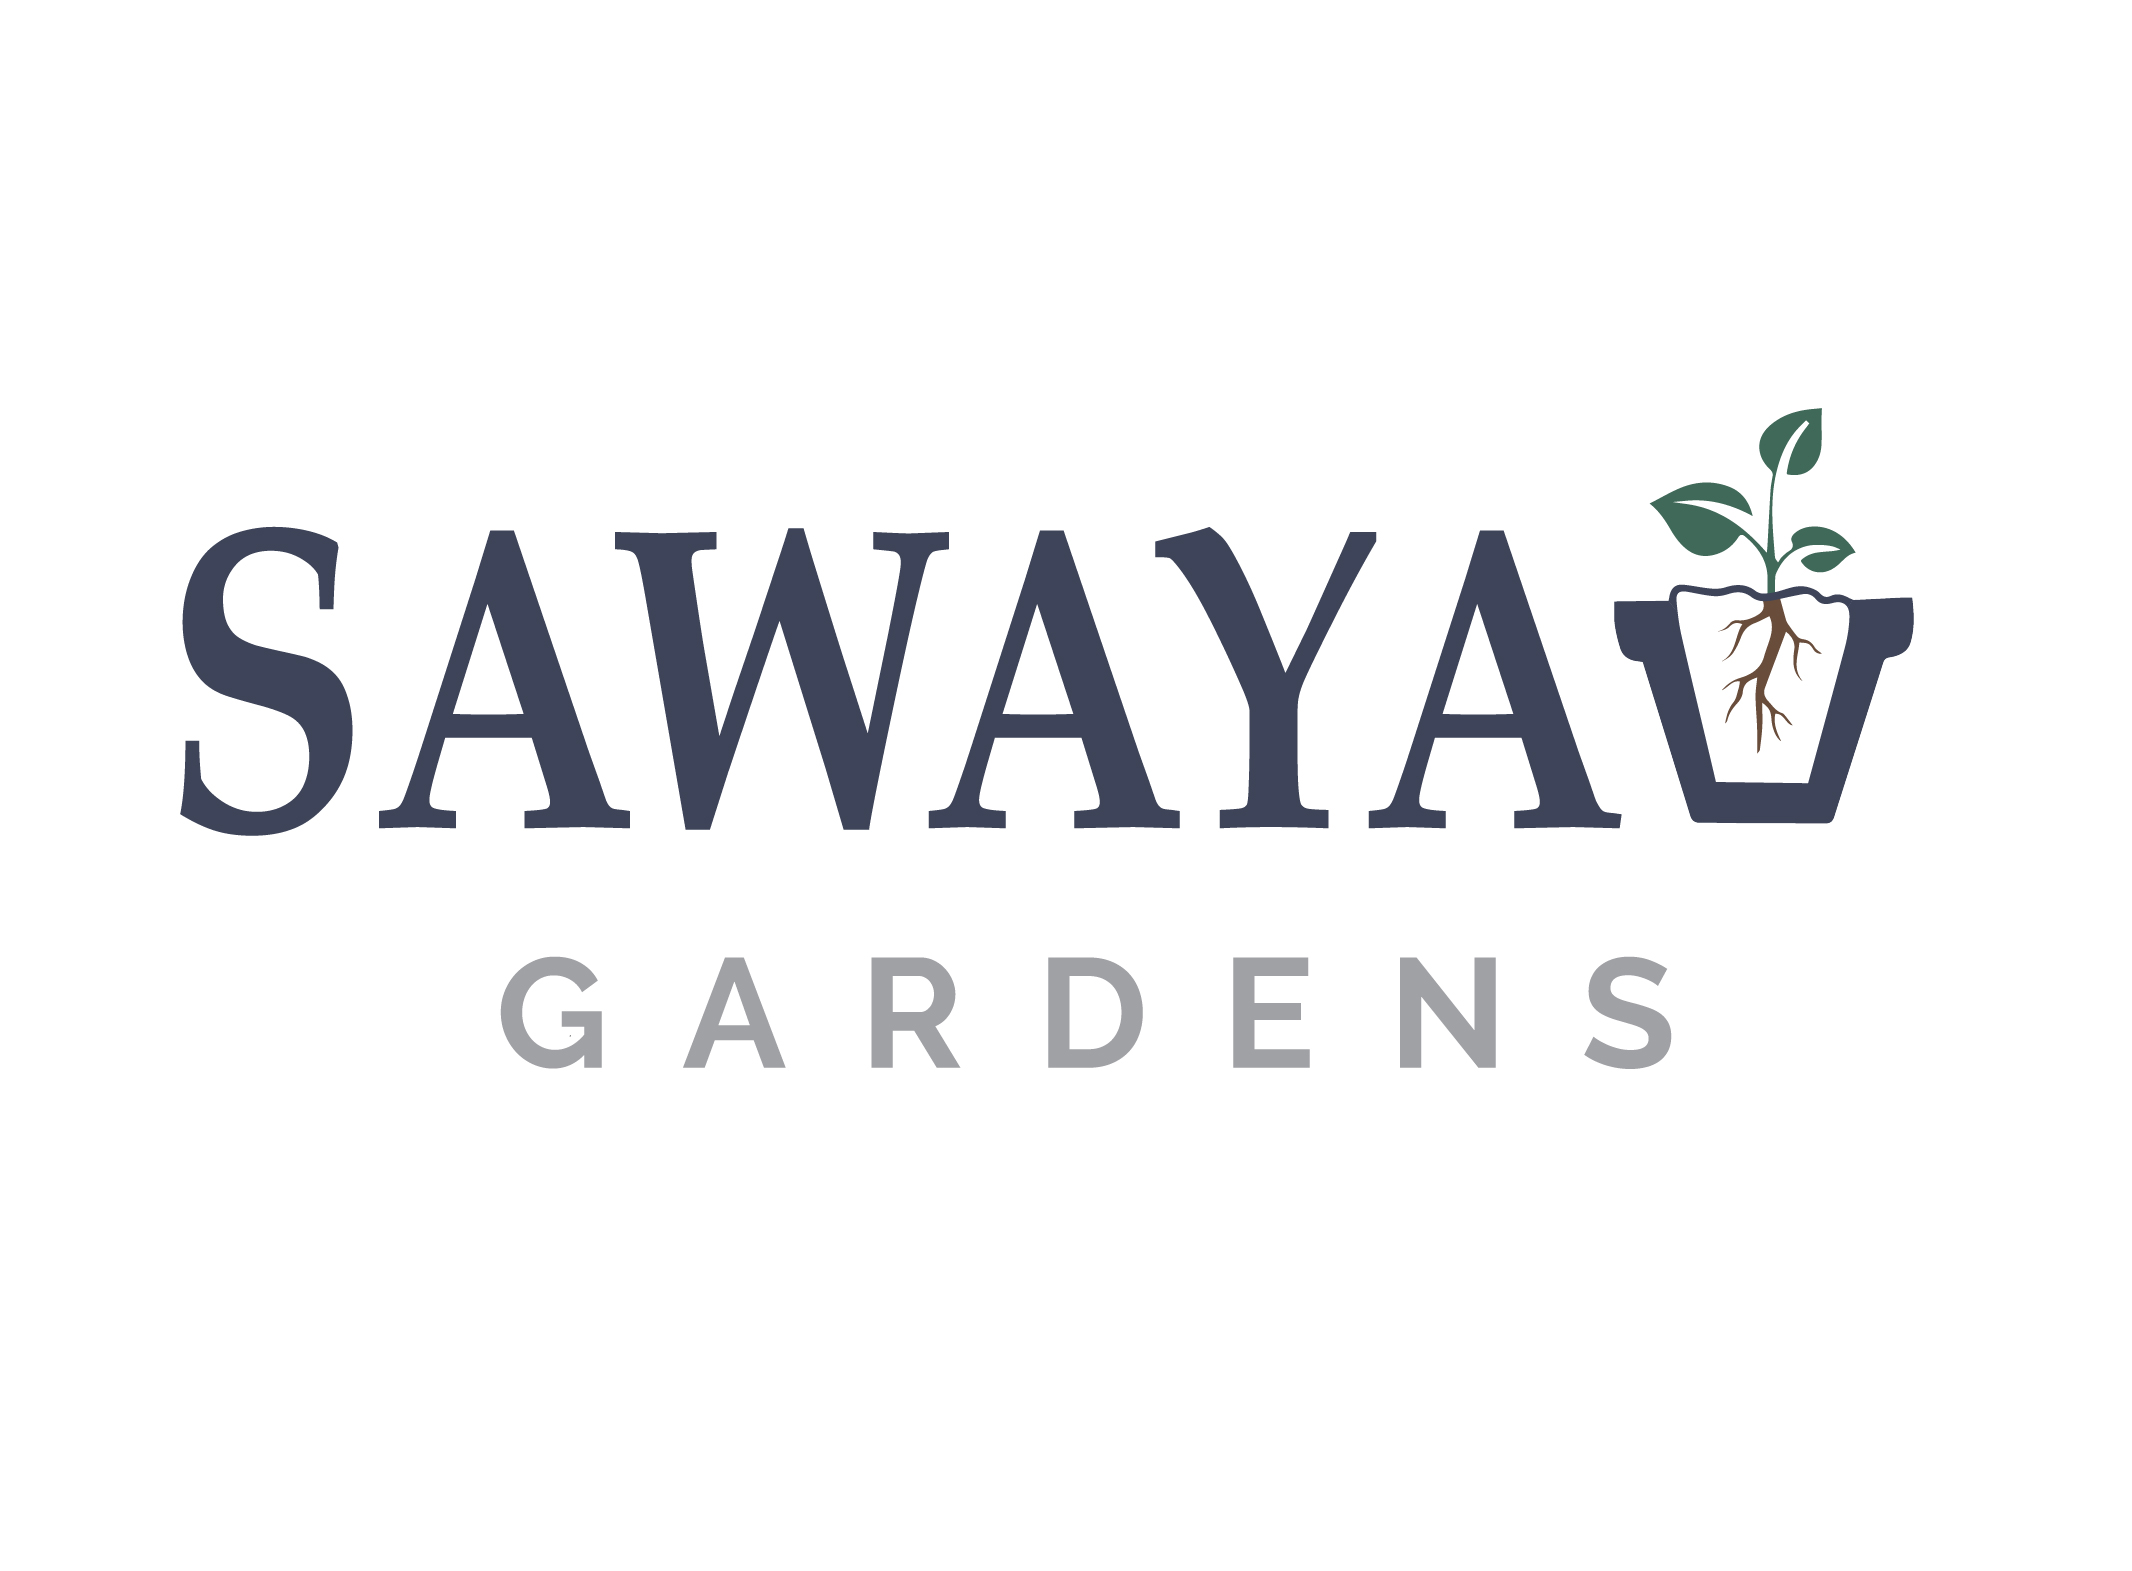 Sawaya Gardens